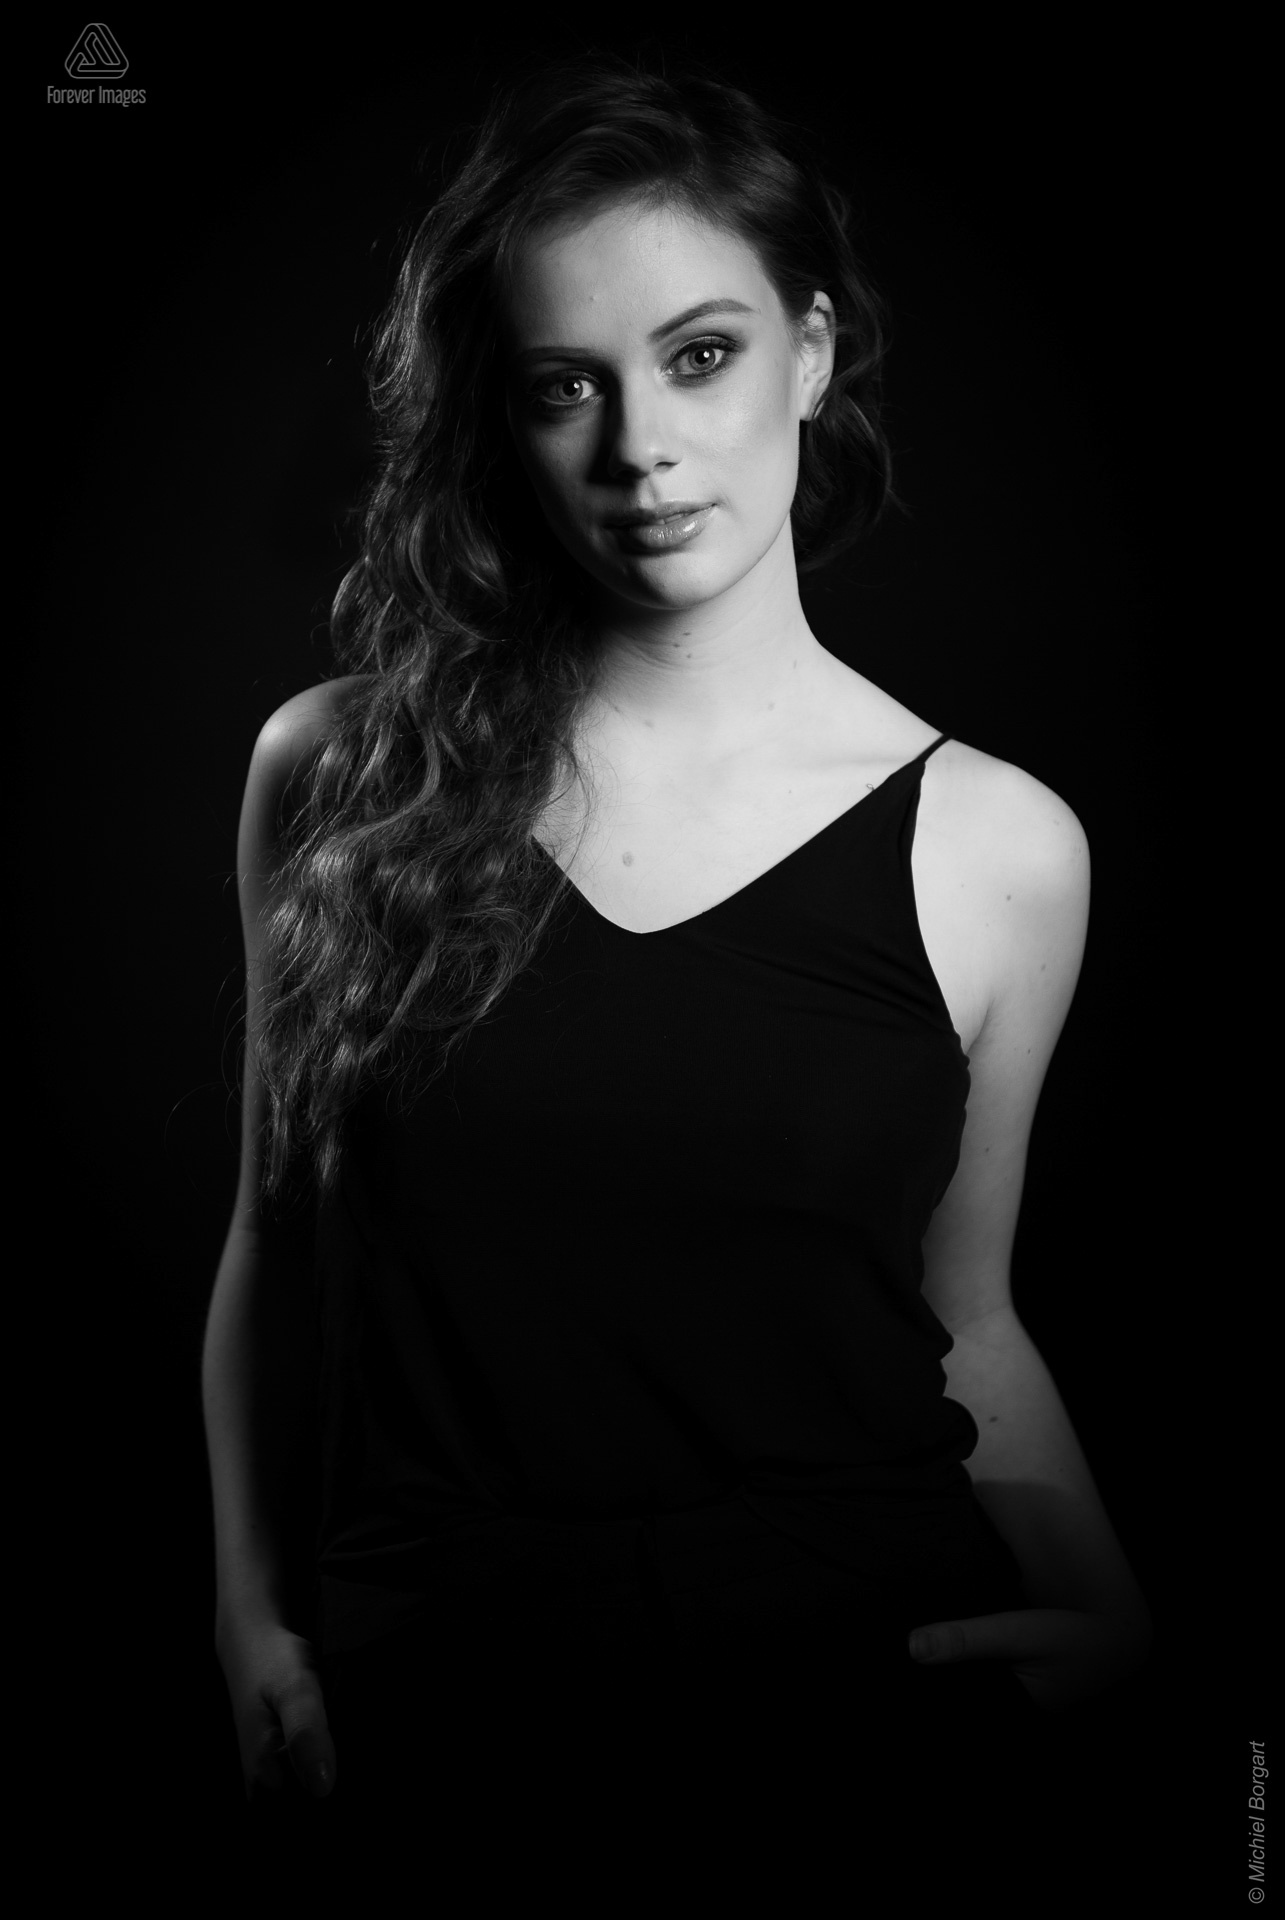 Fashionfoto portretfoto zwart-wit low key camera kijkend | Roxanne Vleemink Miss Avantgarde David Cardenas | Fashionfotograaf Michiel Borgart - Forever Images.